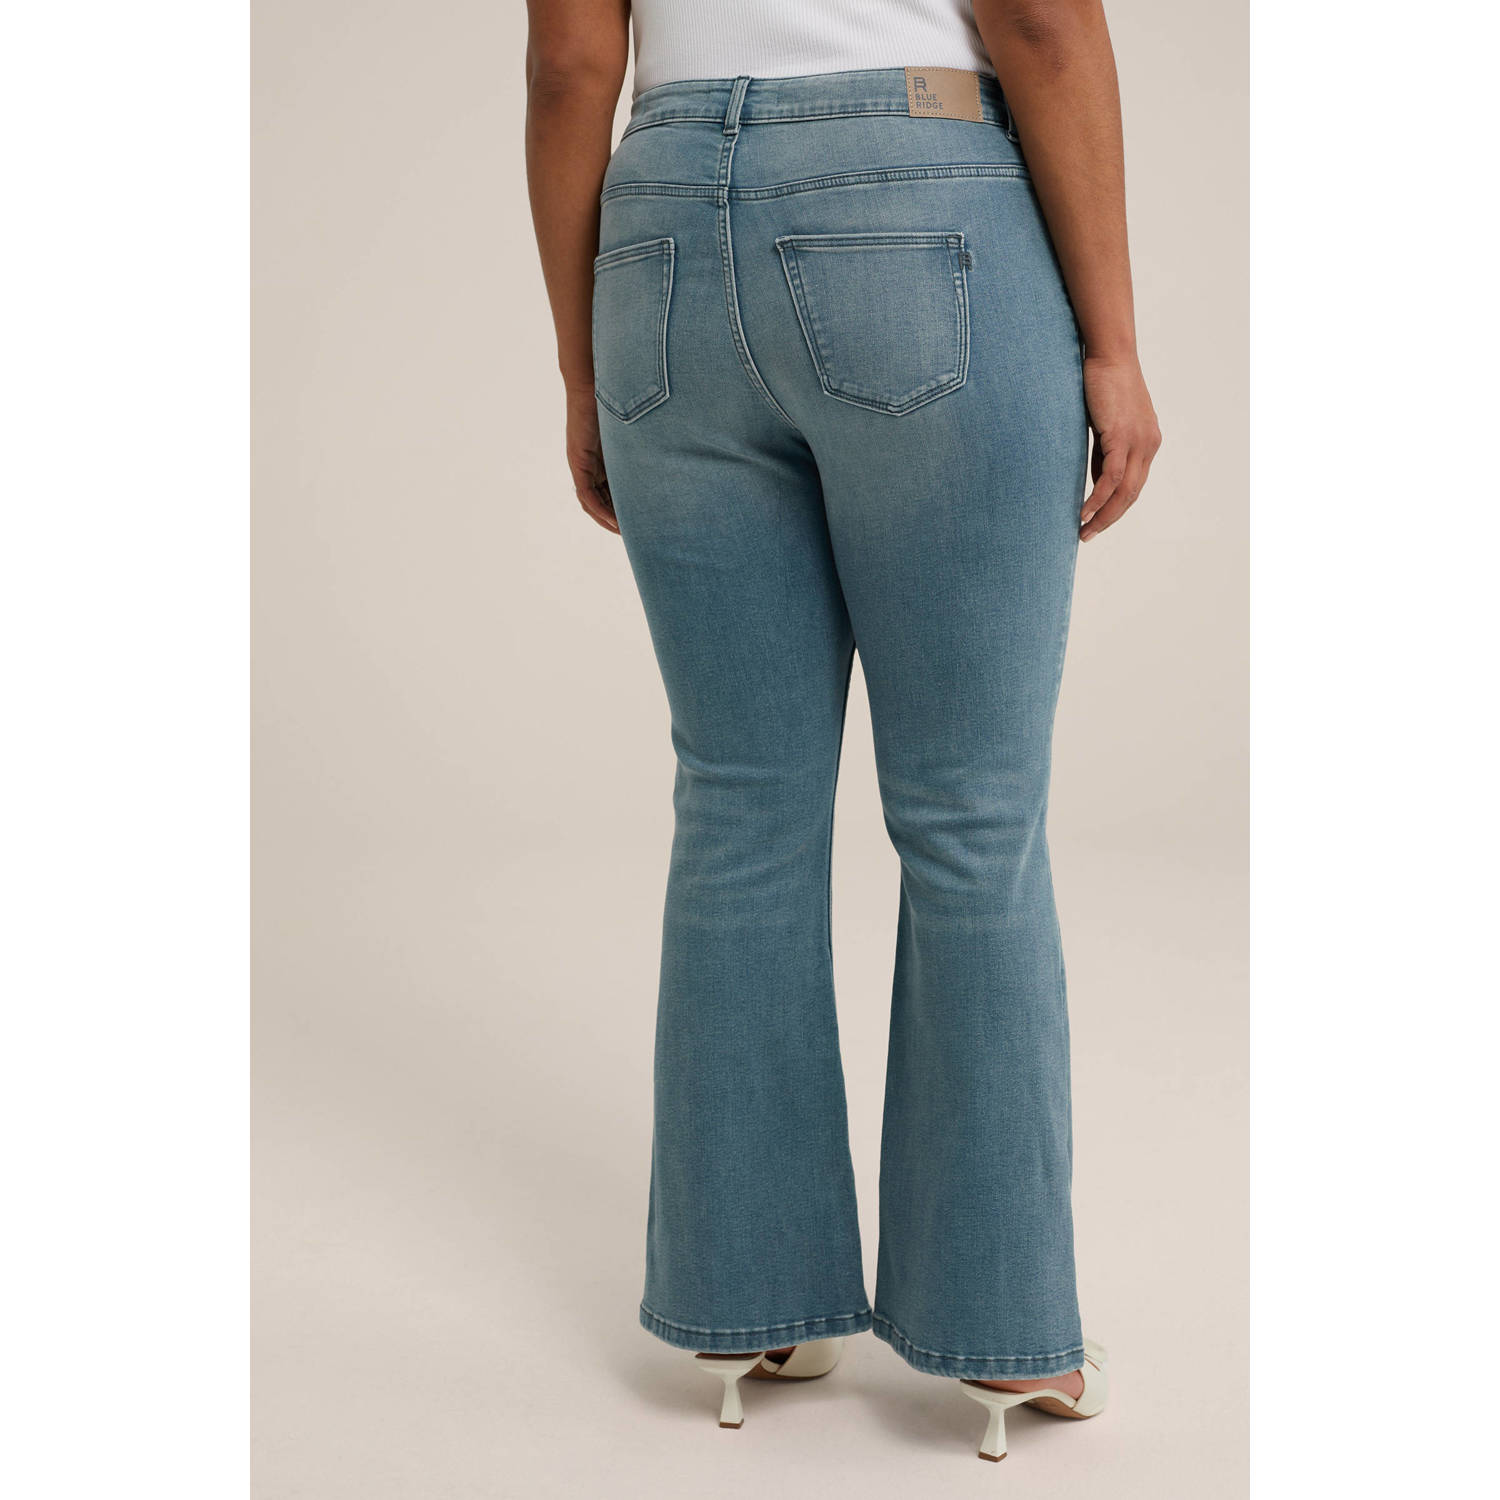 WE Fashion Curve flared jeans medium blue denim